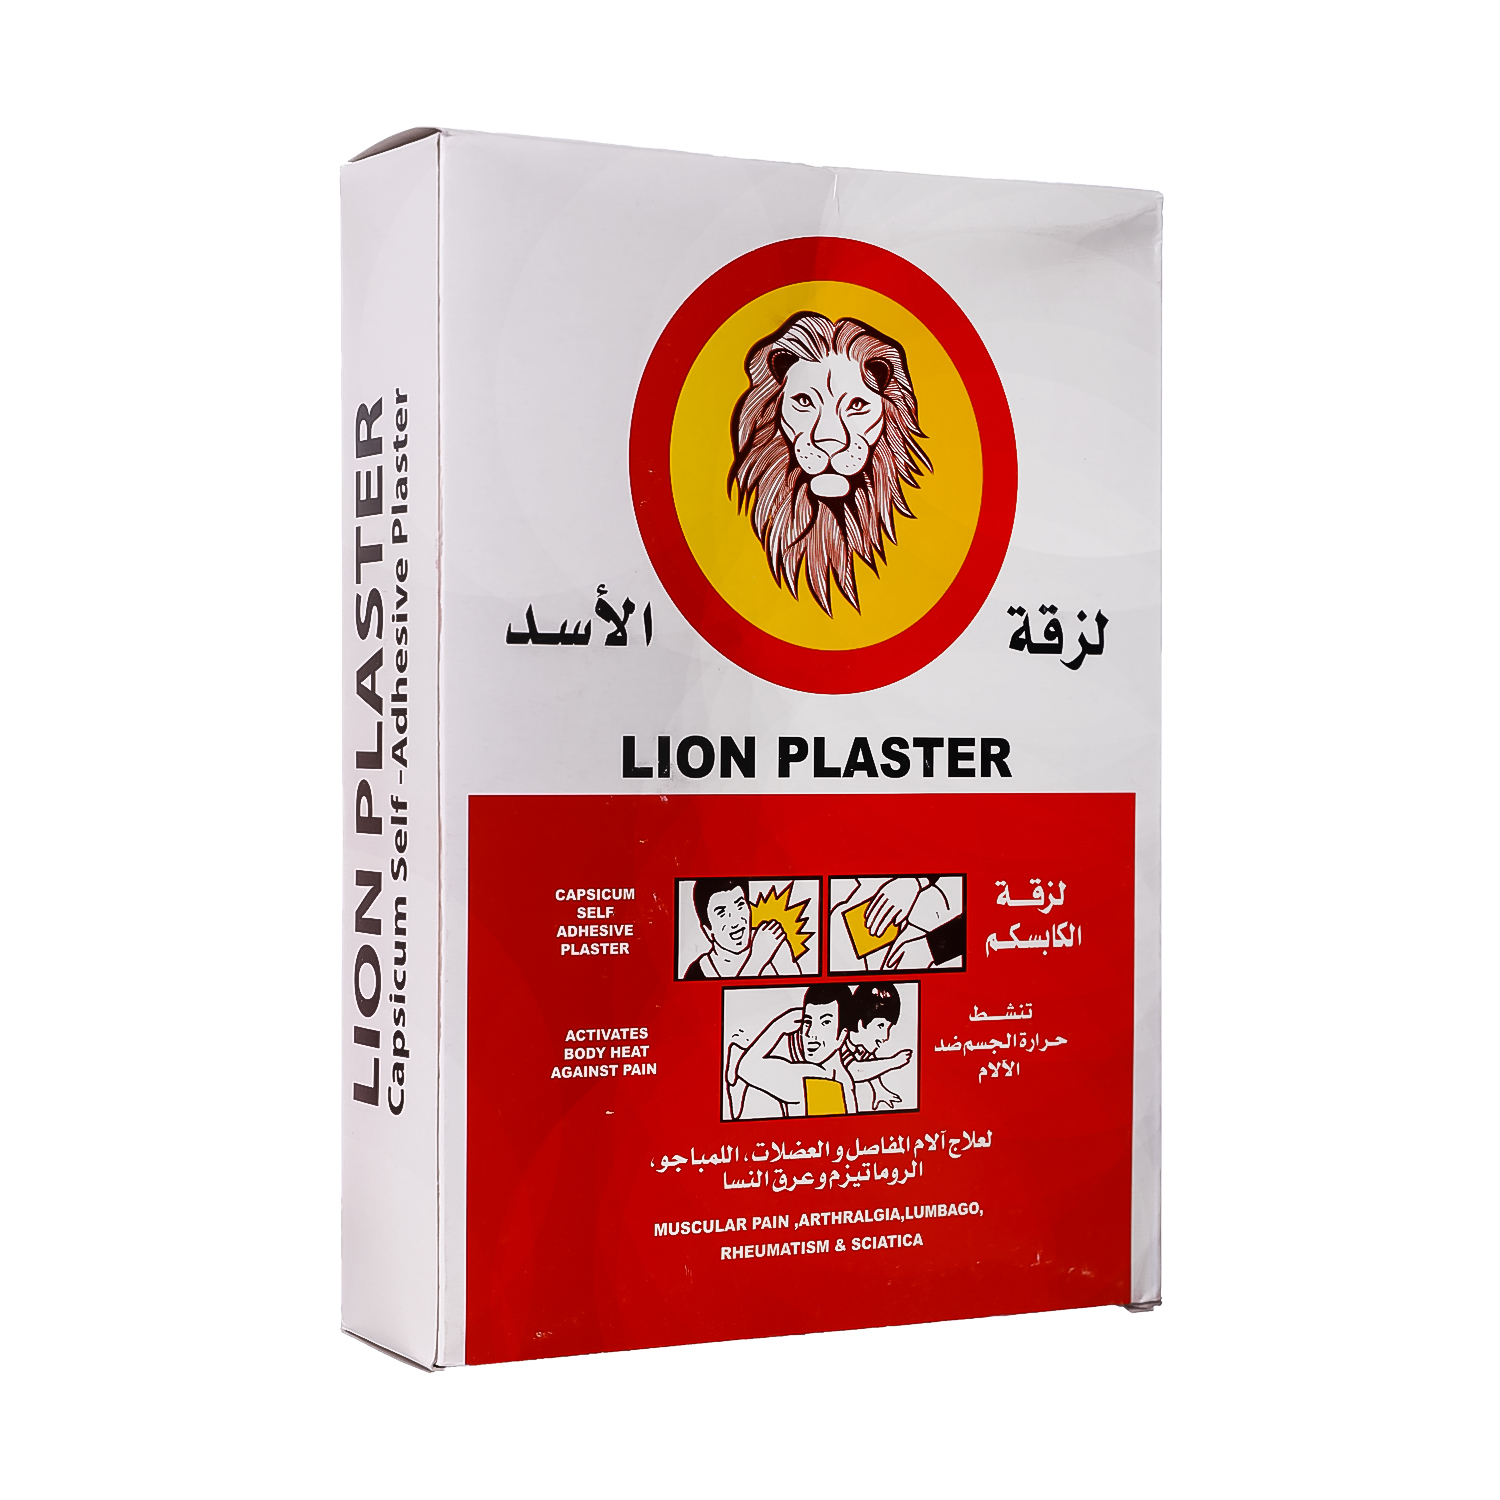 lions plaster